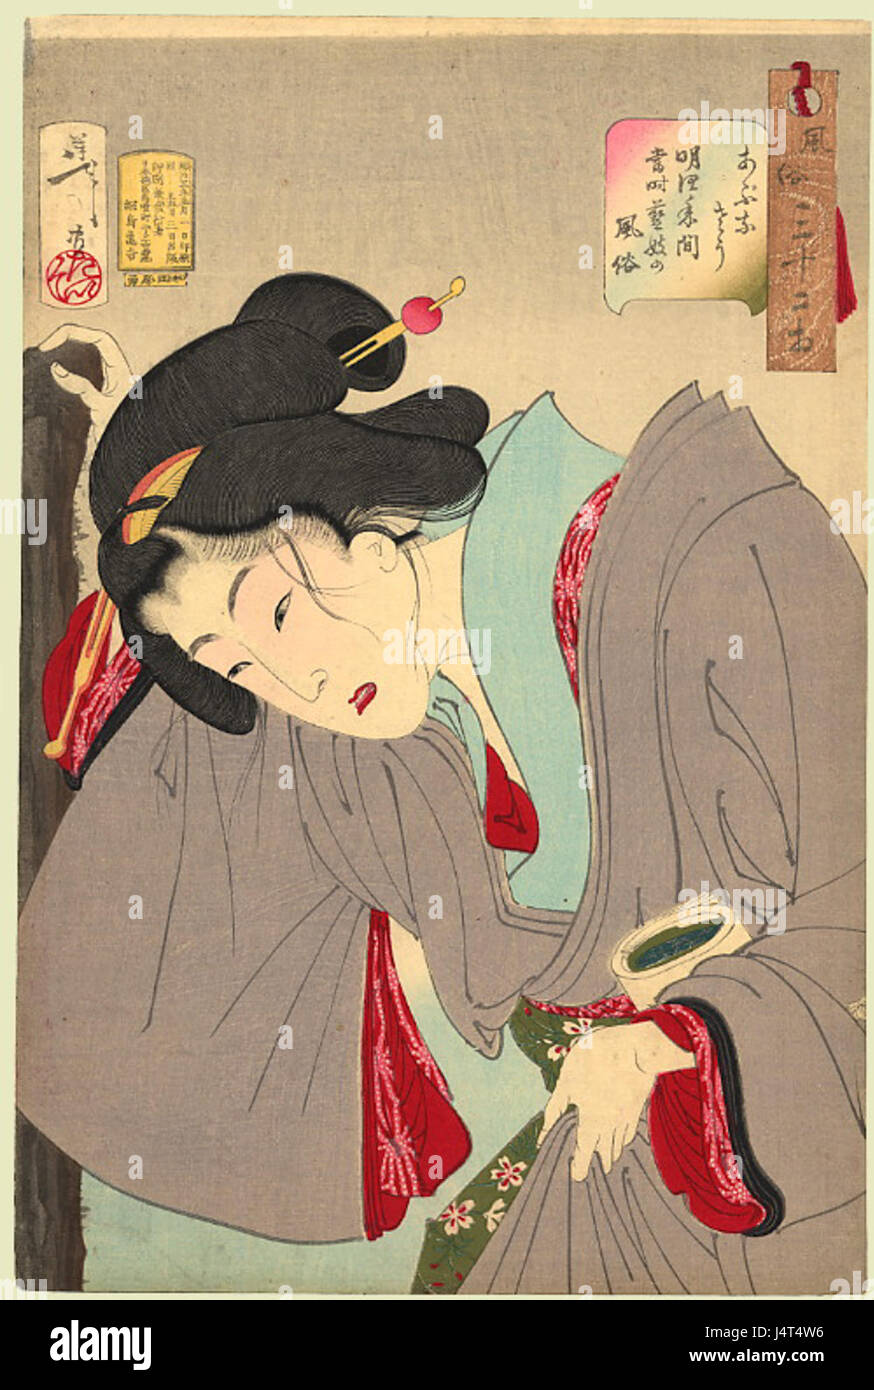 Tsukioka Yoshitoshi   Looking like a dangerous situation   the appearance of a contemporary geisha of the Meiji era Stock Photo